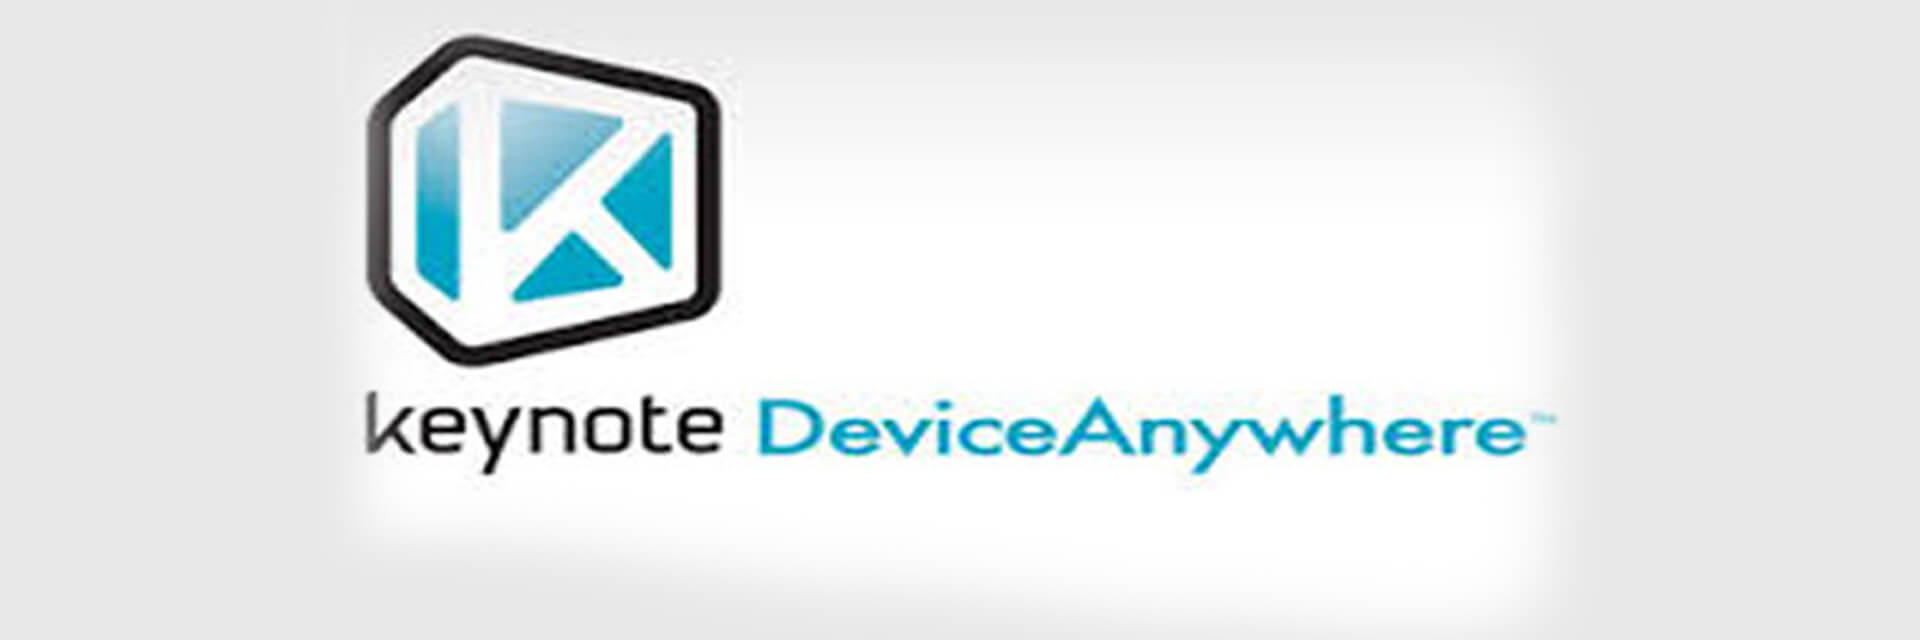 Keynote DeviceAnywhere Mobile emulator